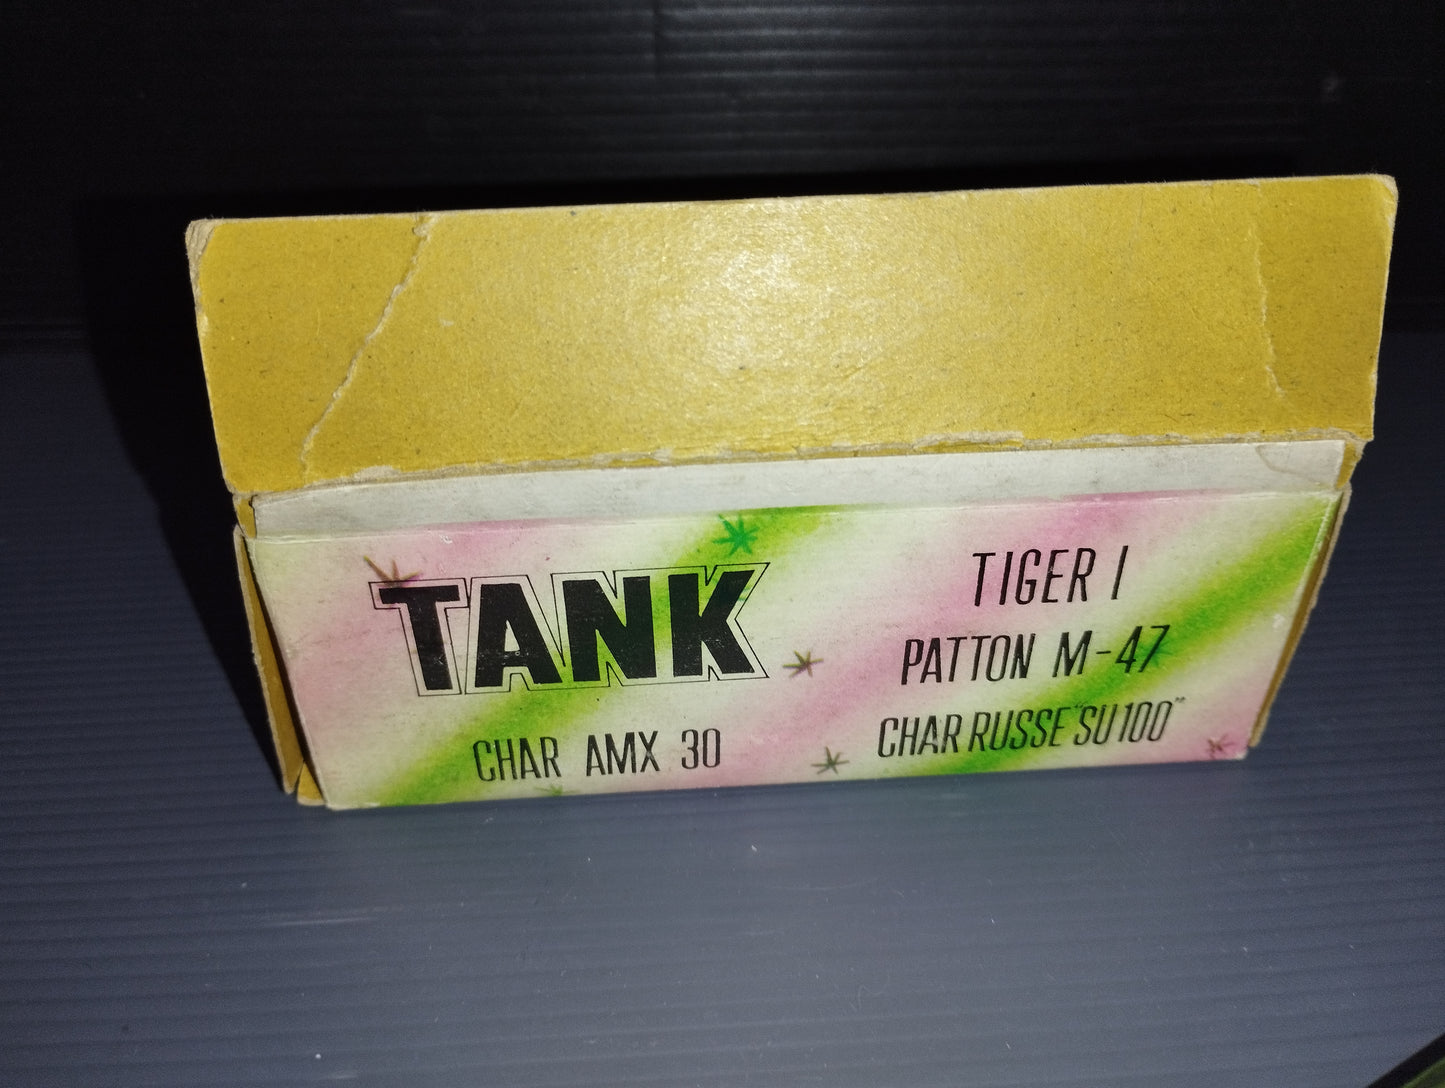 Tank Char AMX 30 model

 Produced by Mandarin Code T-707-4

 60s/70s